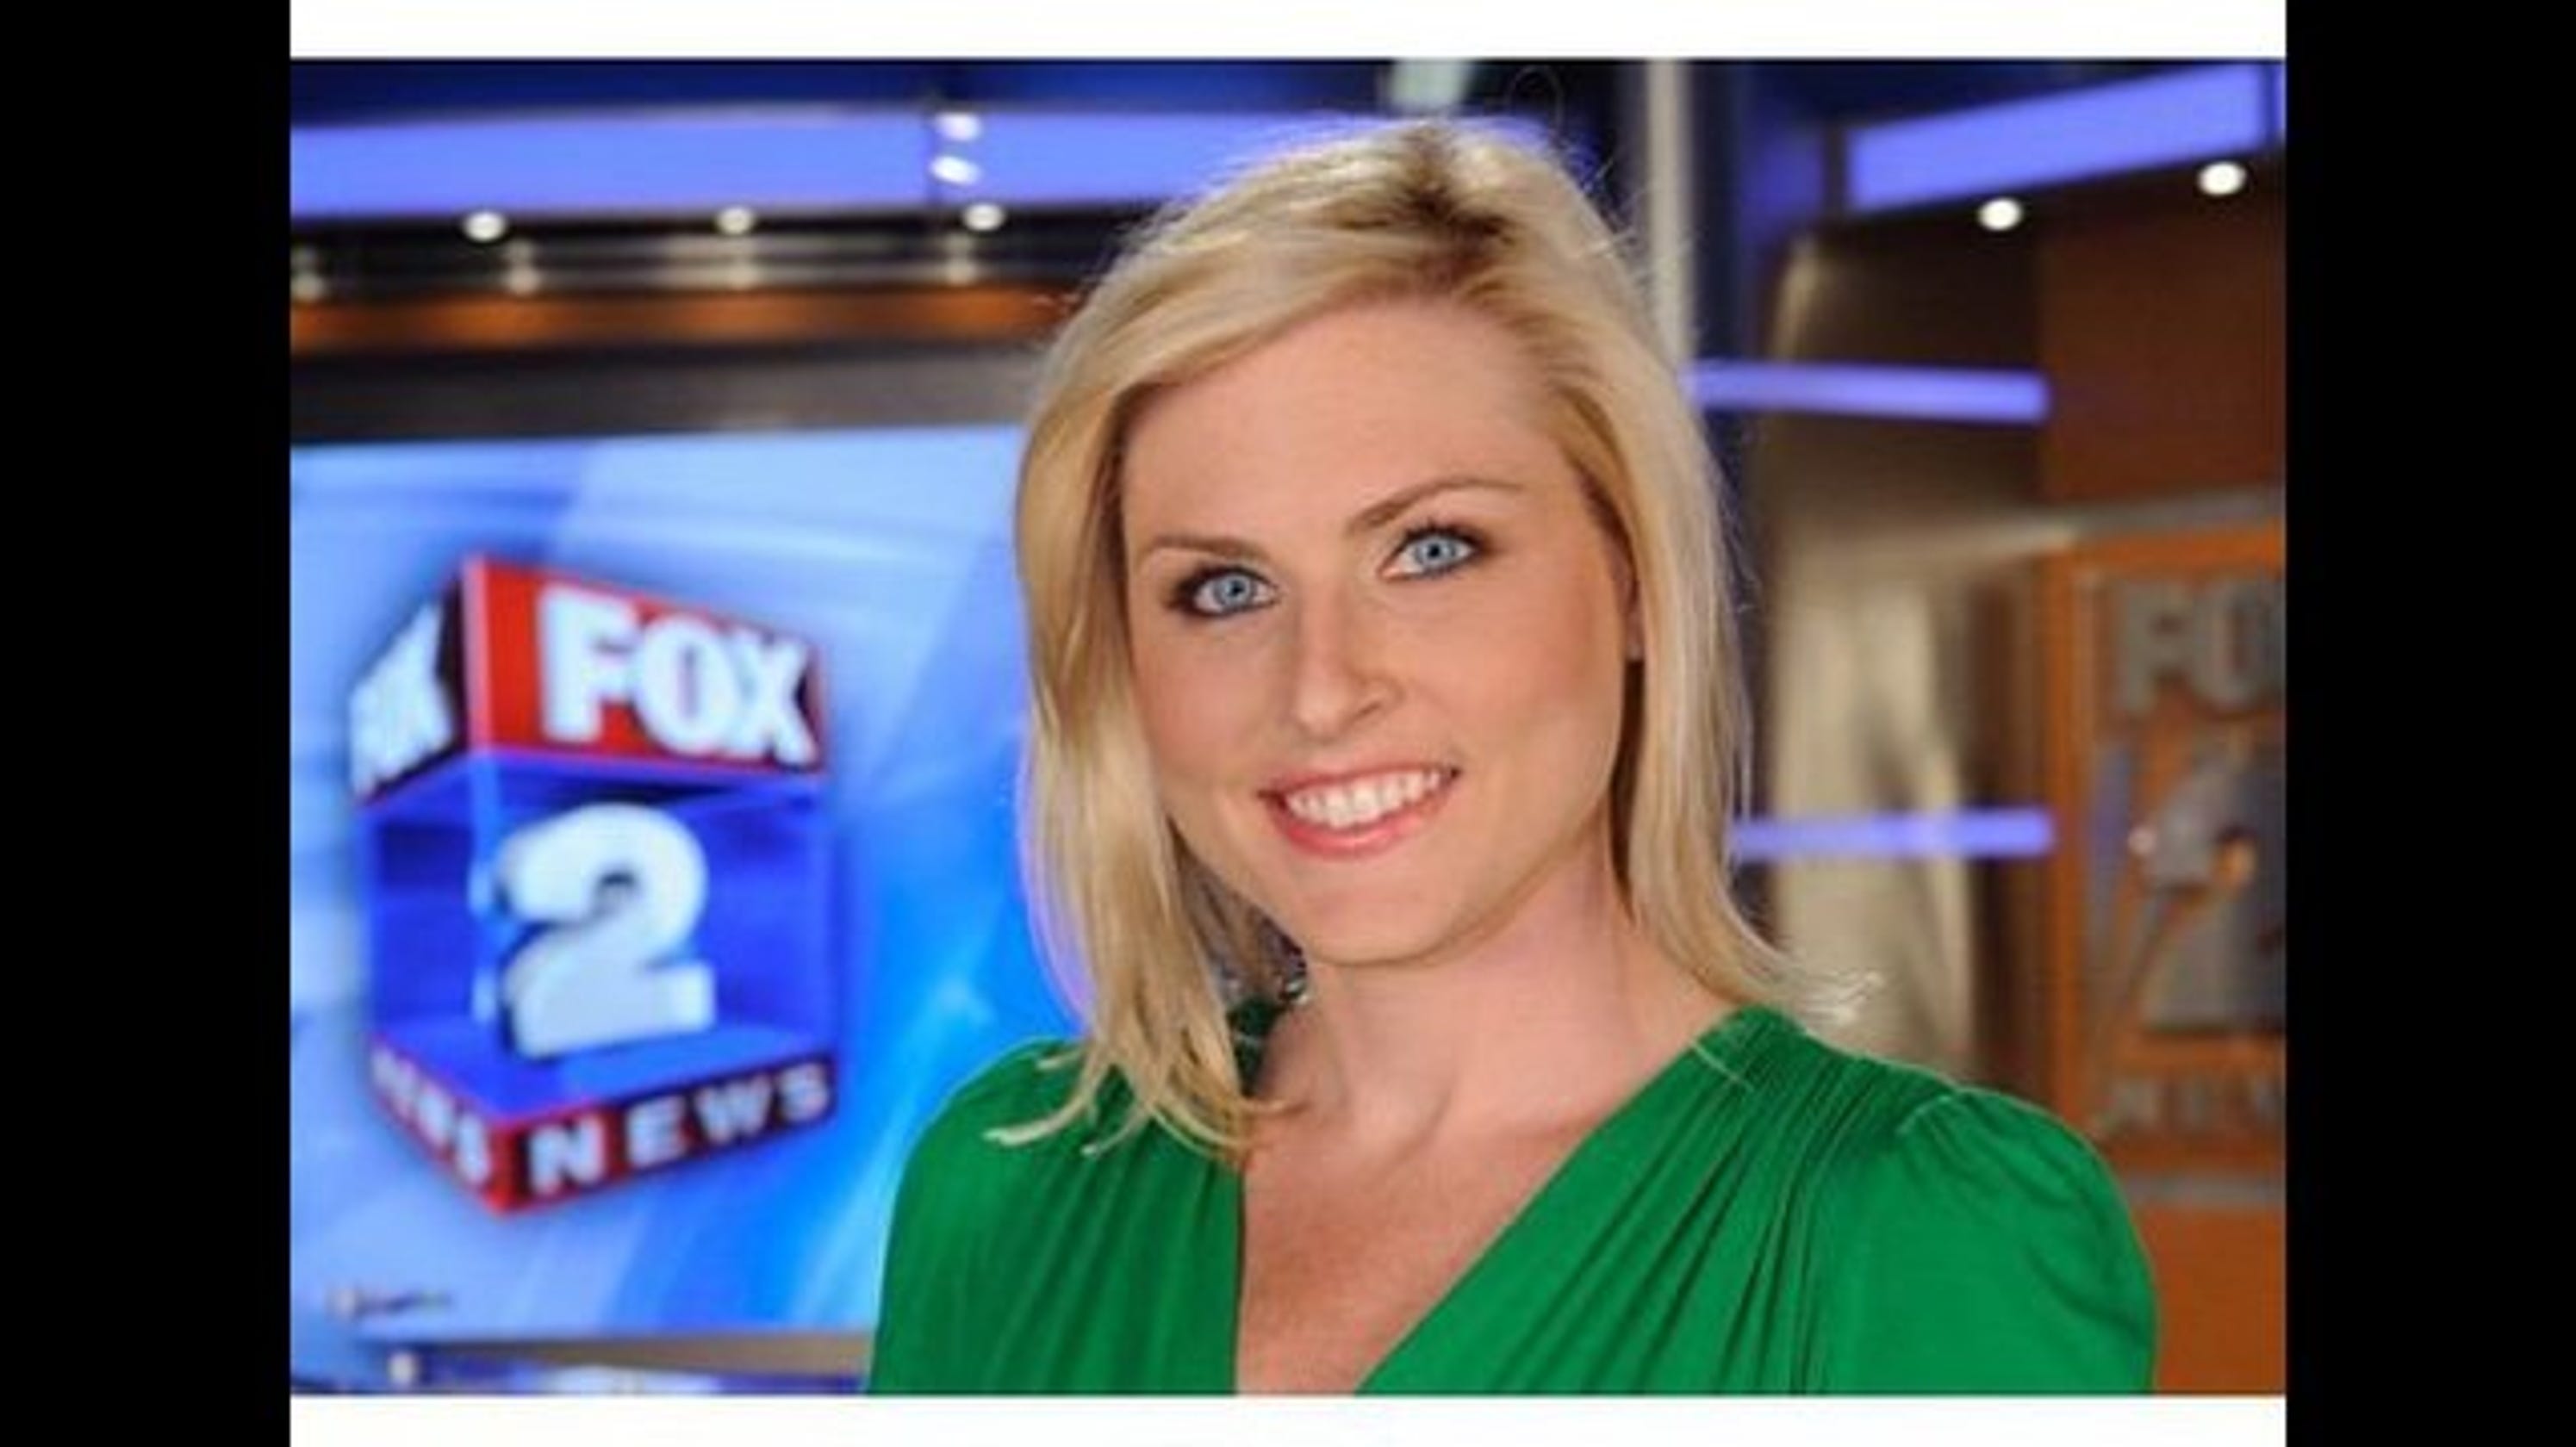 Fox 2 Detroit meteorologist Jessica Starr commits suicide2990 x 1680